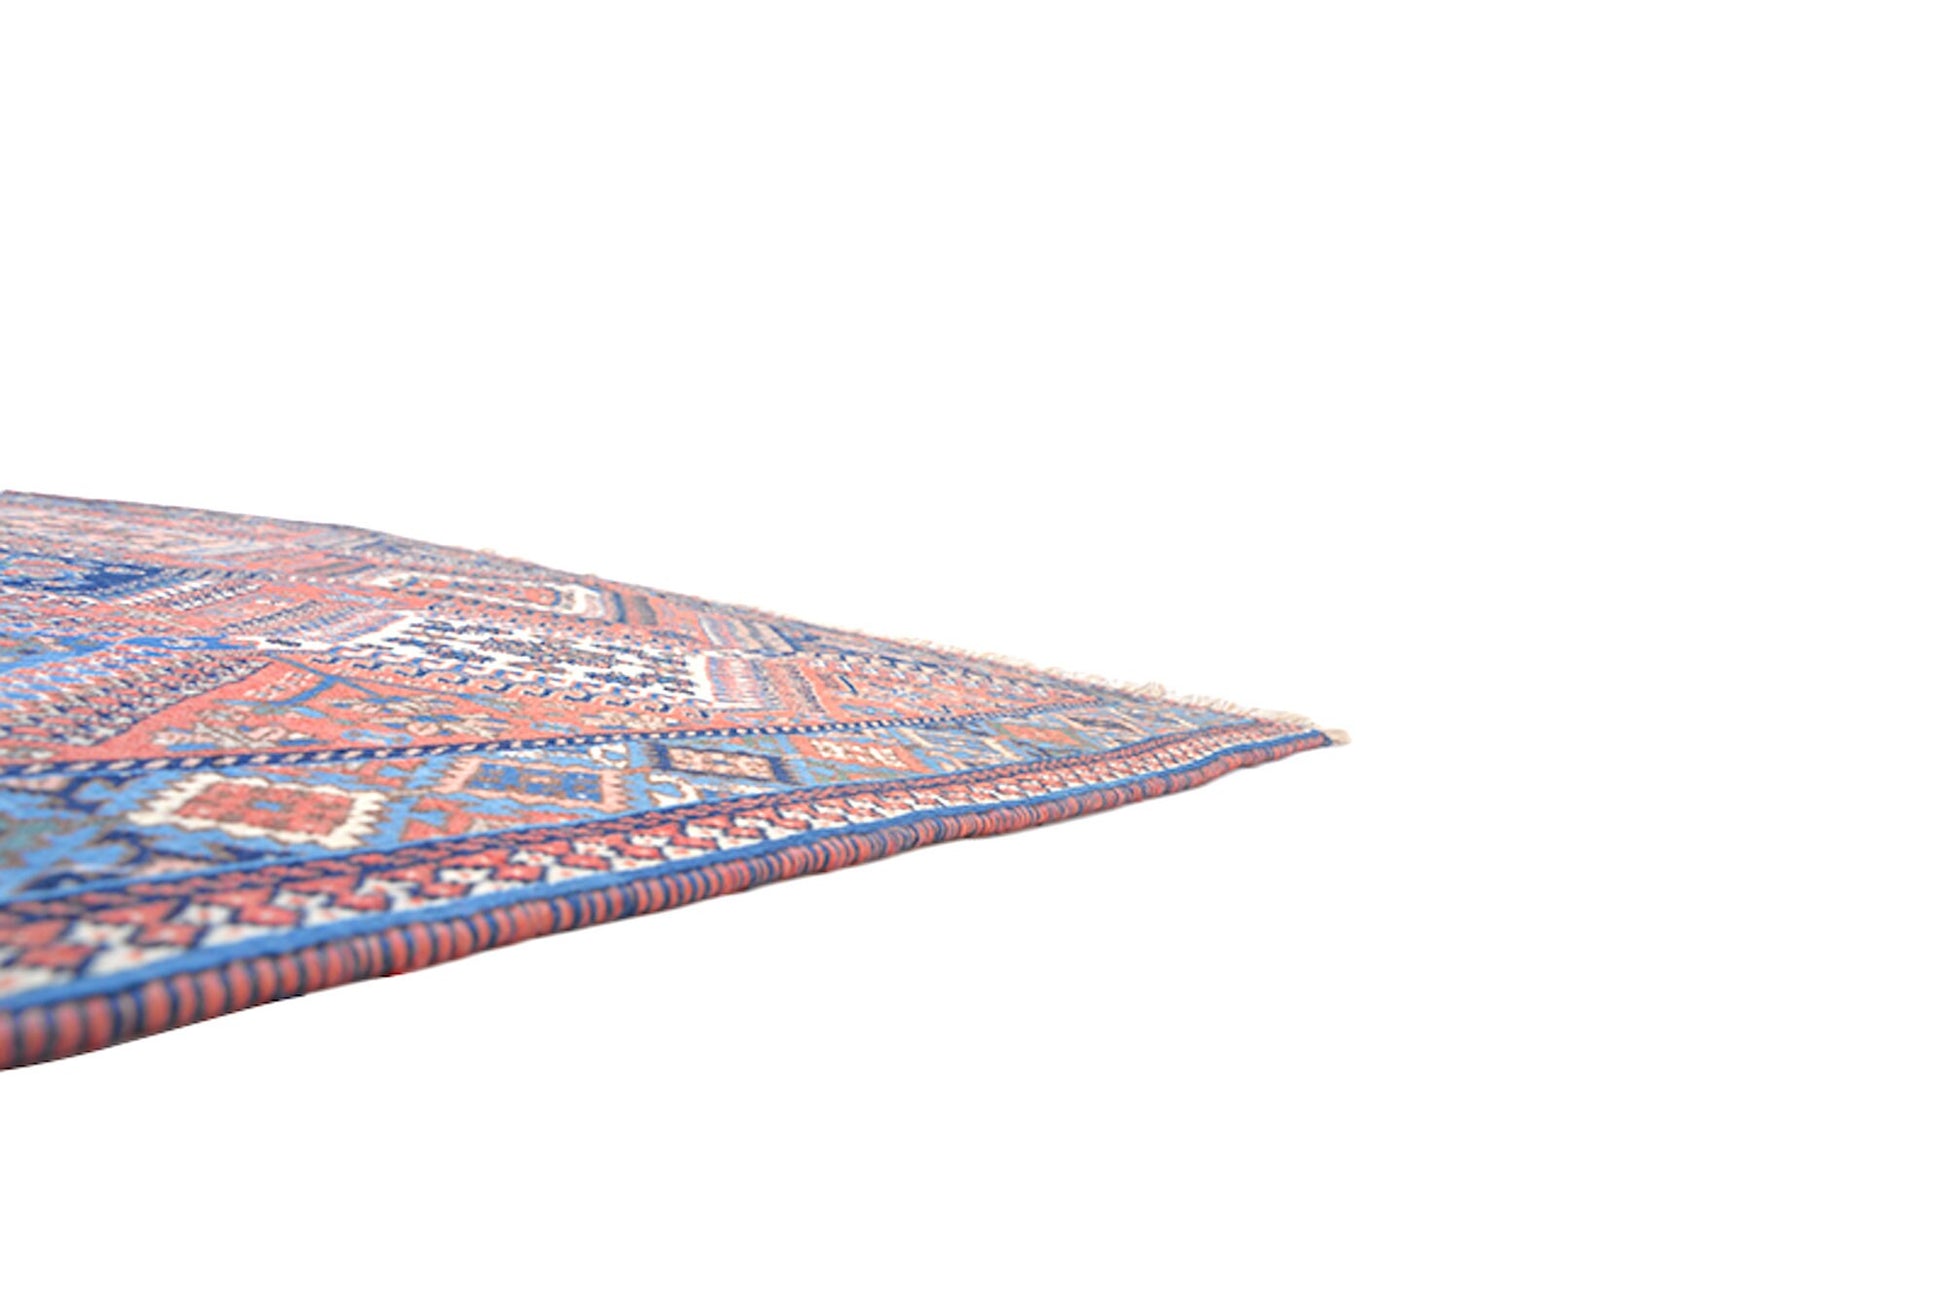 3 x 5 Orange Blue Turkish Tribal Rug | Hand Woven with Diamond Shaped Geometric Pattern | Accent Rustic Home Decor Rug